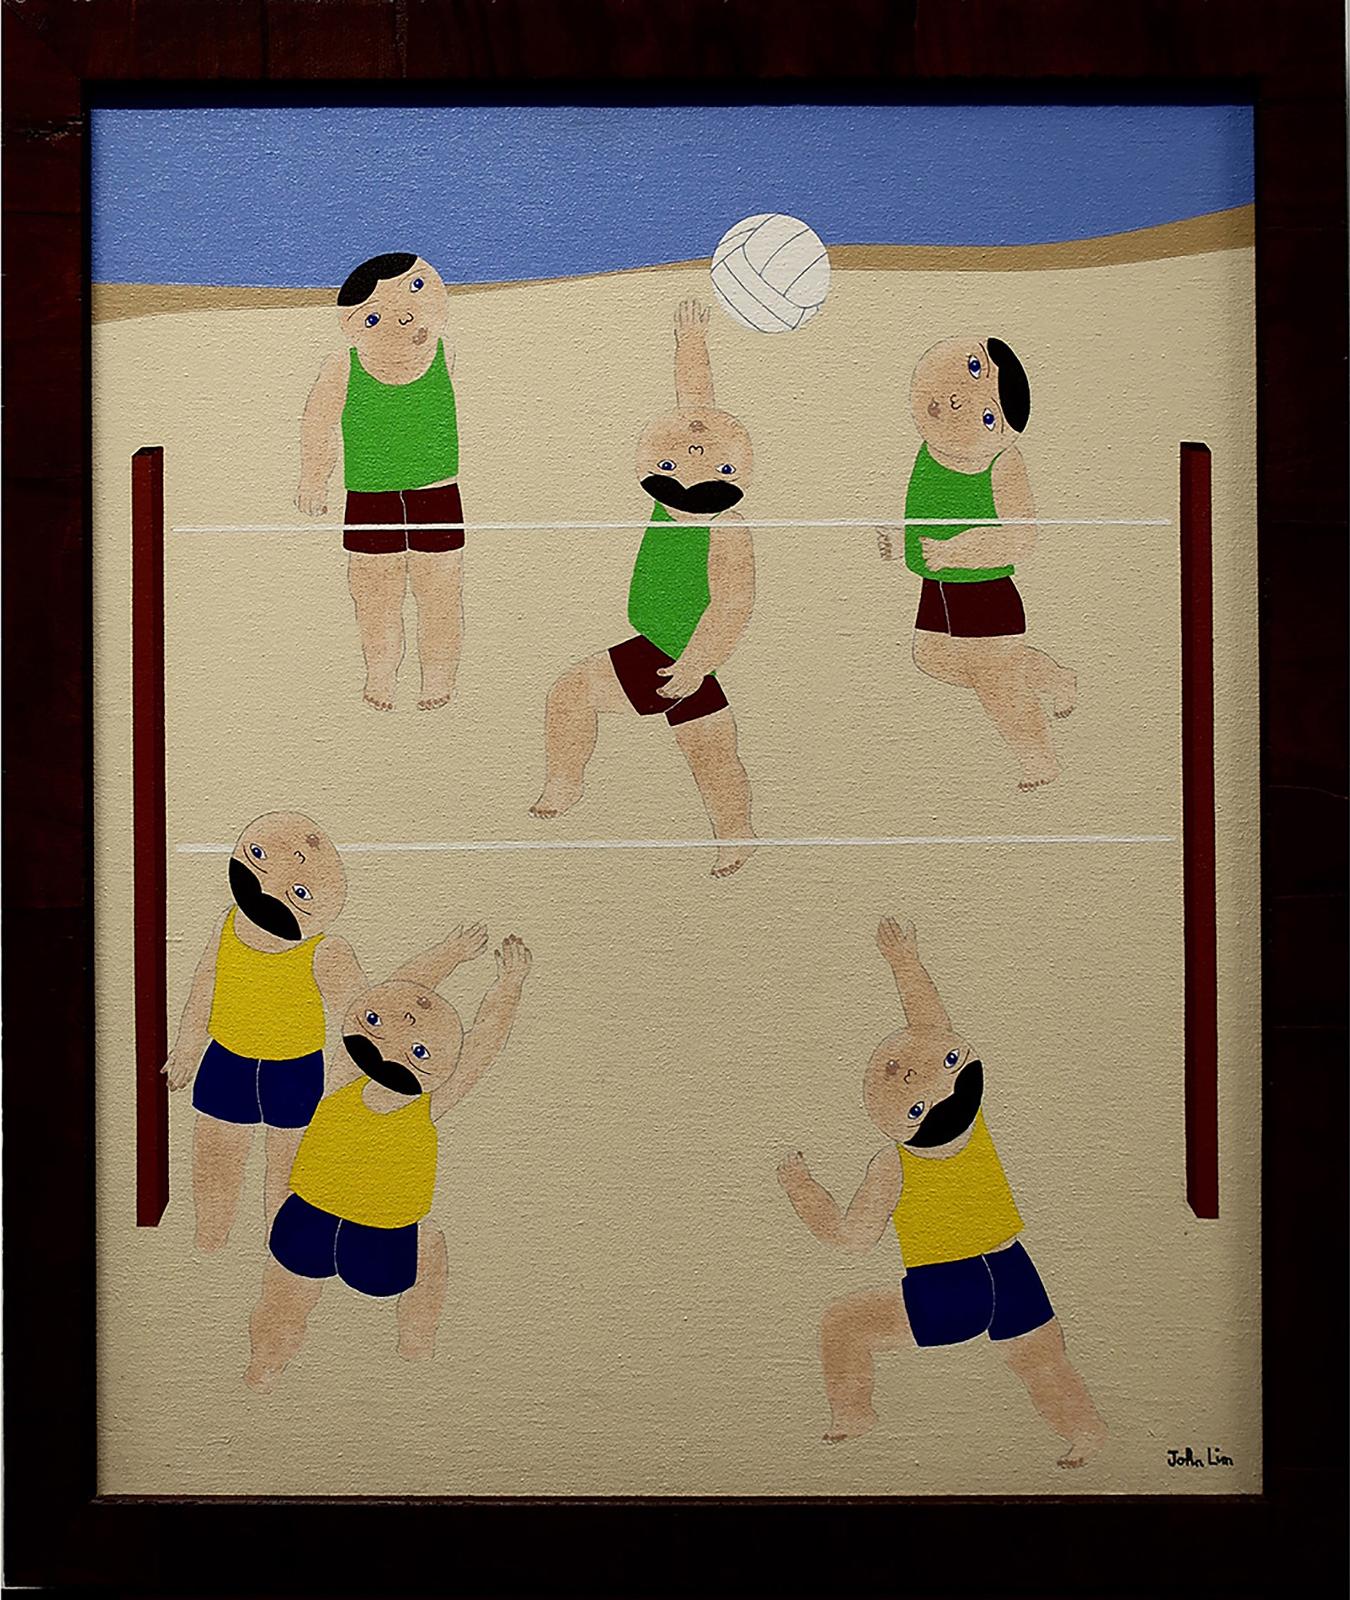 John Lim (1932) - Untitled (Volleyball)